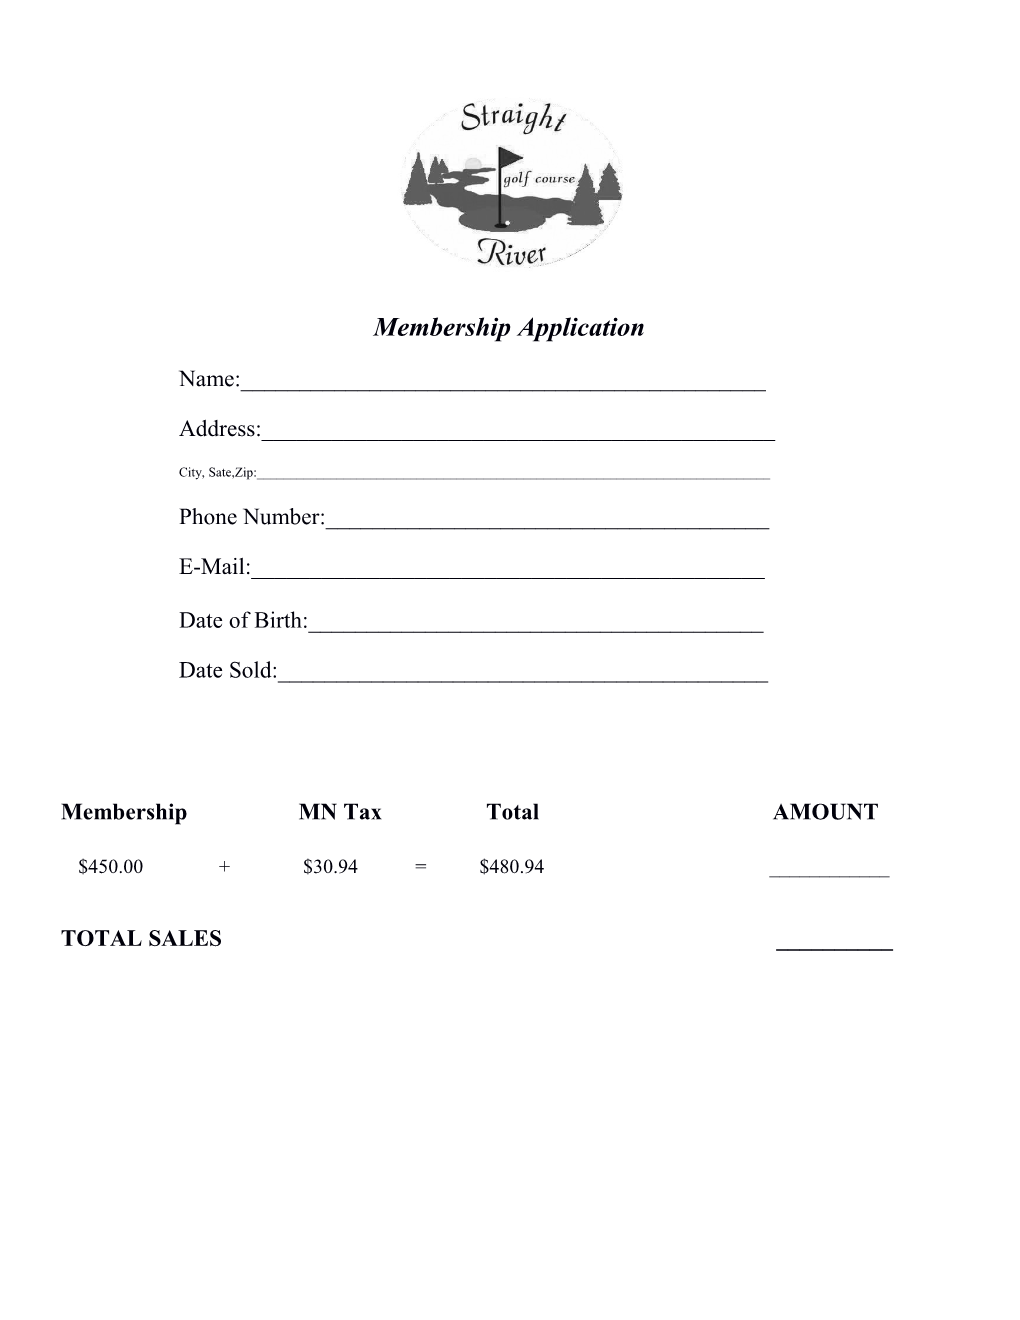 St James Golf Course Membership Application